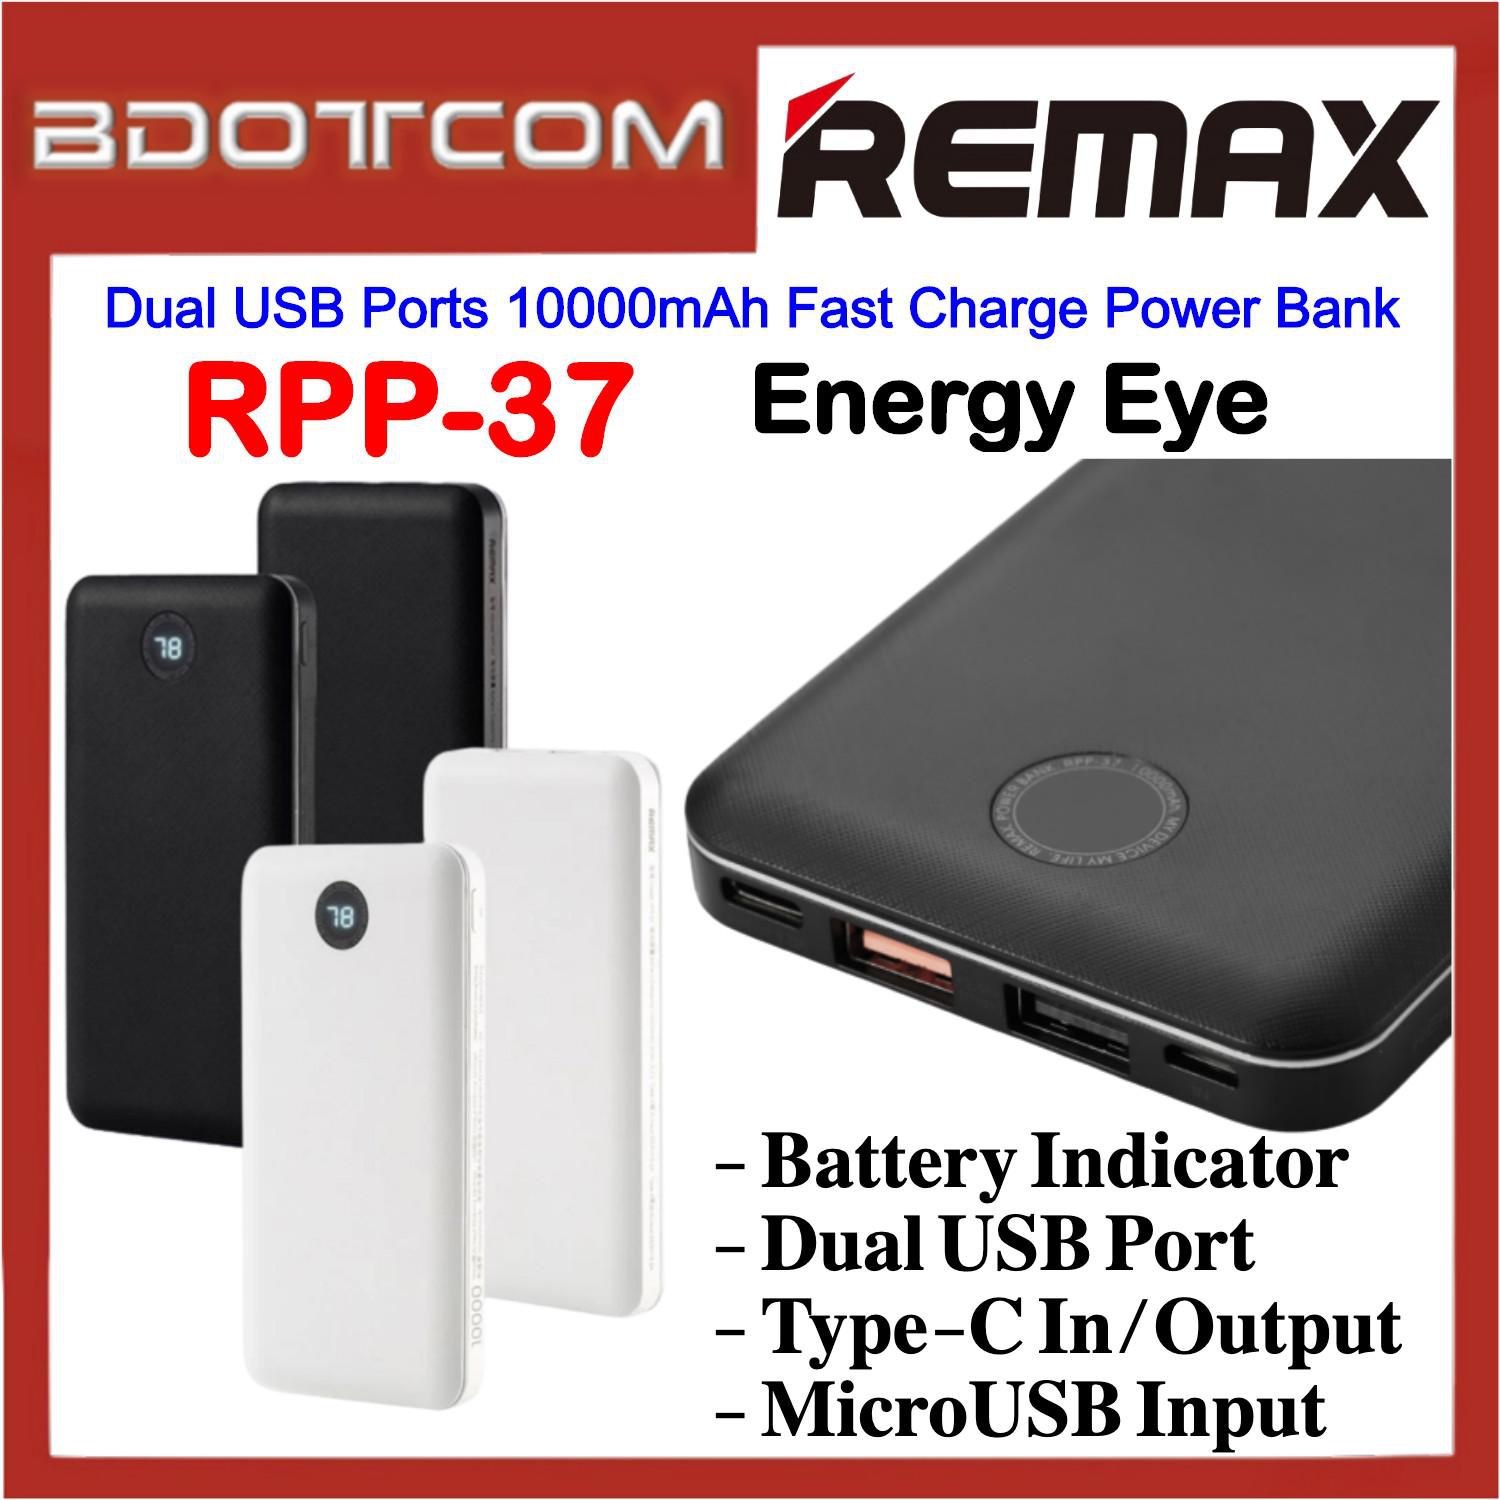 Remax RPP-37 Energy Eye Dual USB Ports 10000mAh Fast Charge Power Bank